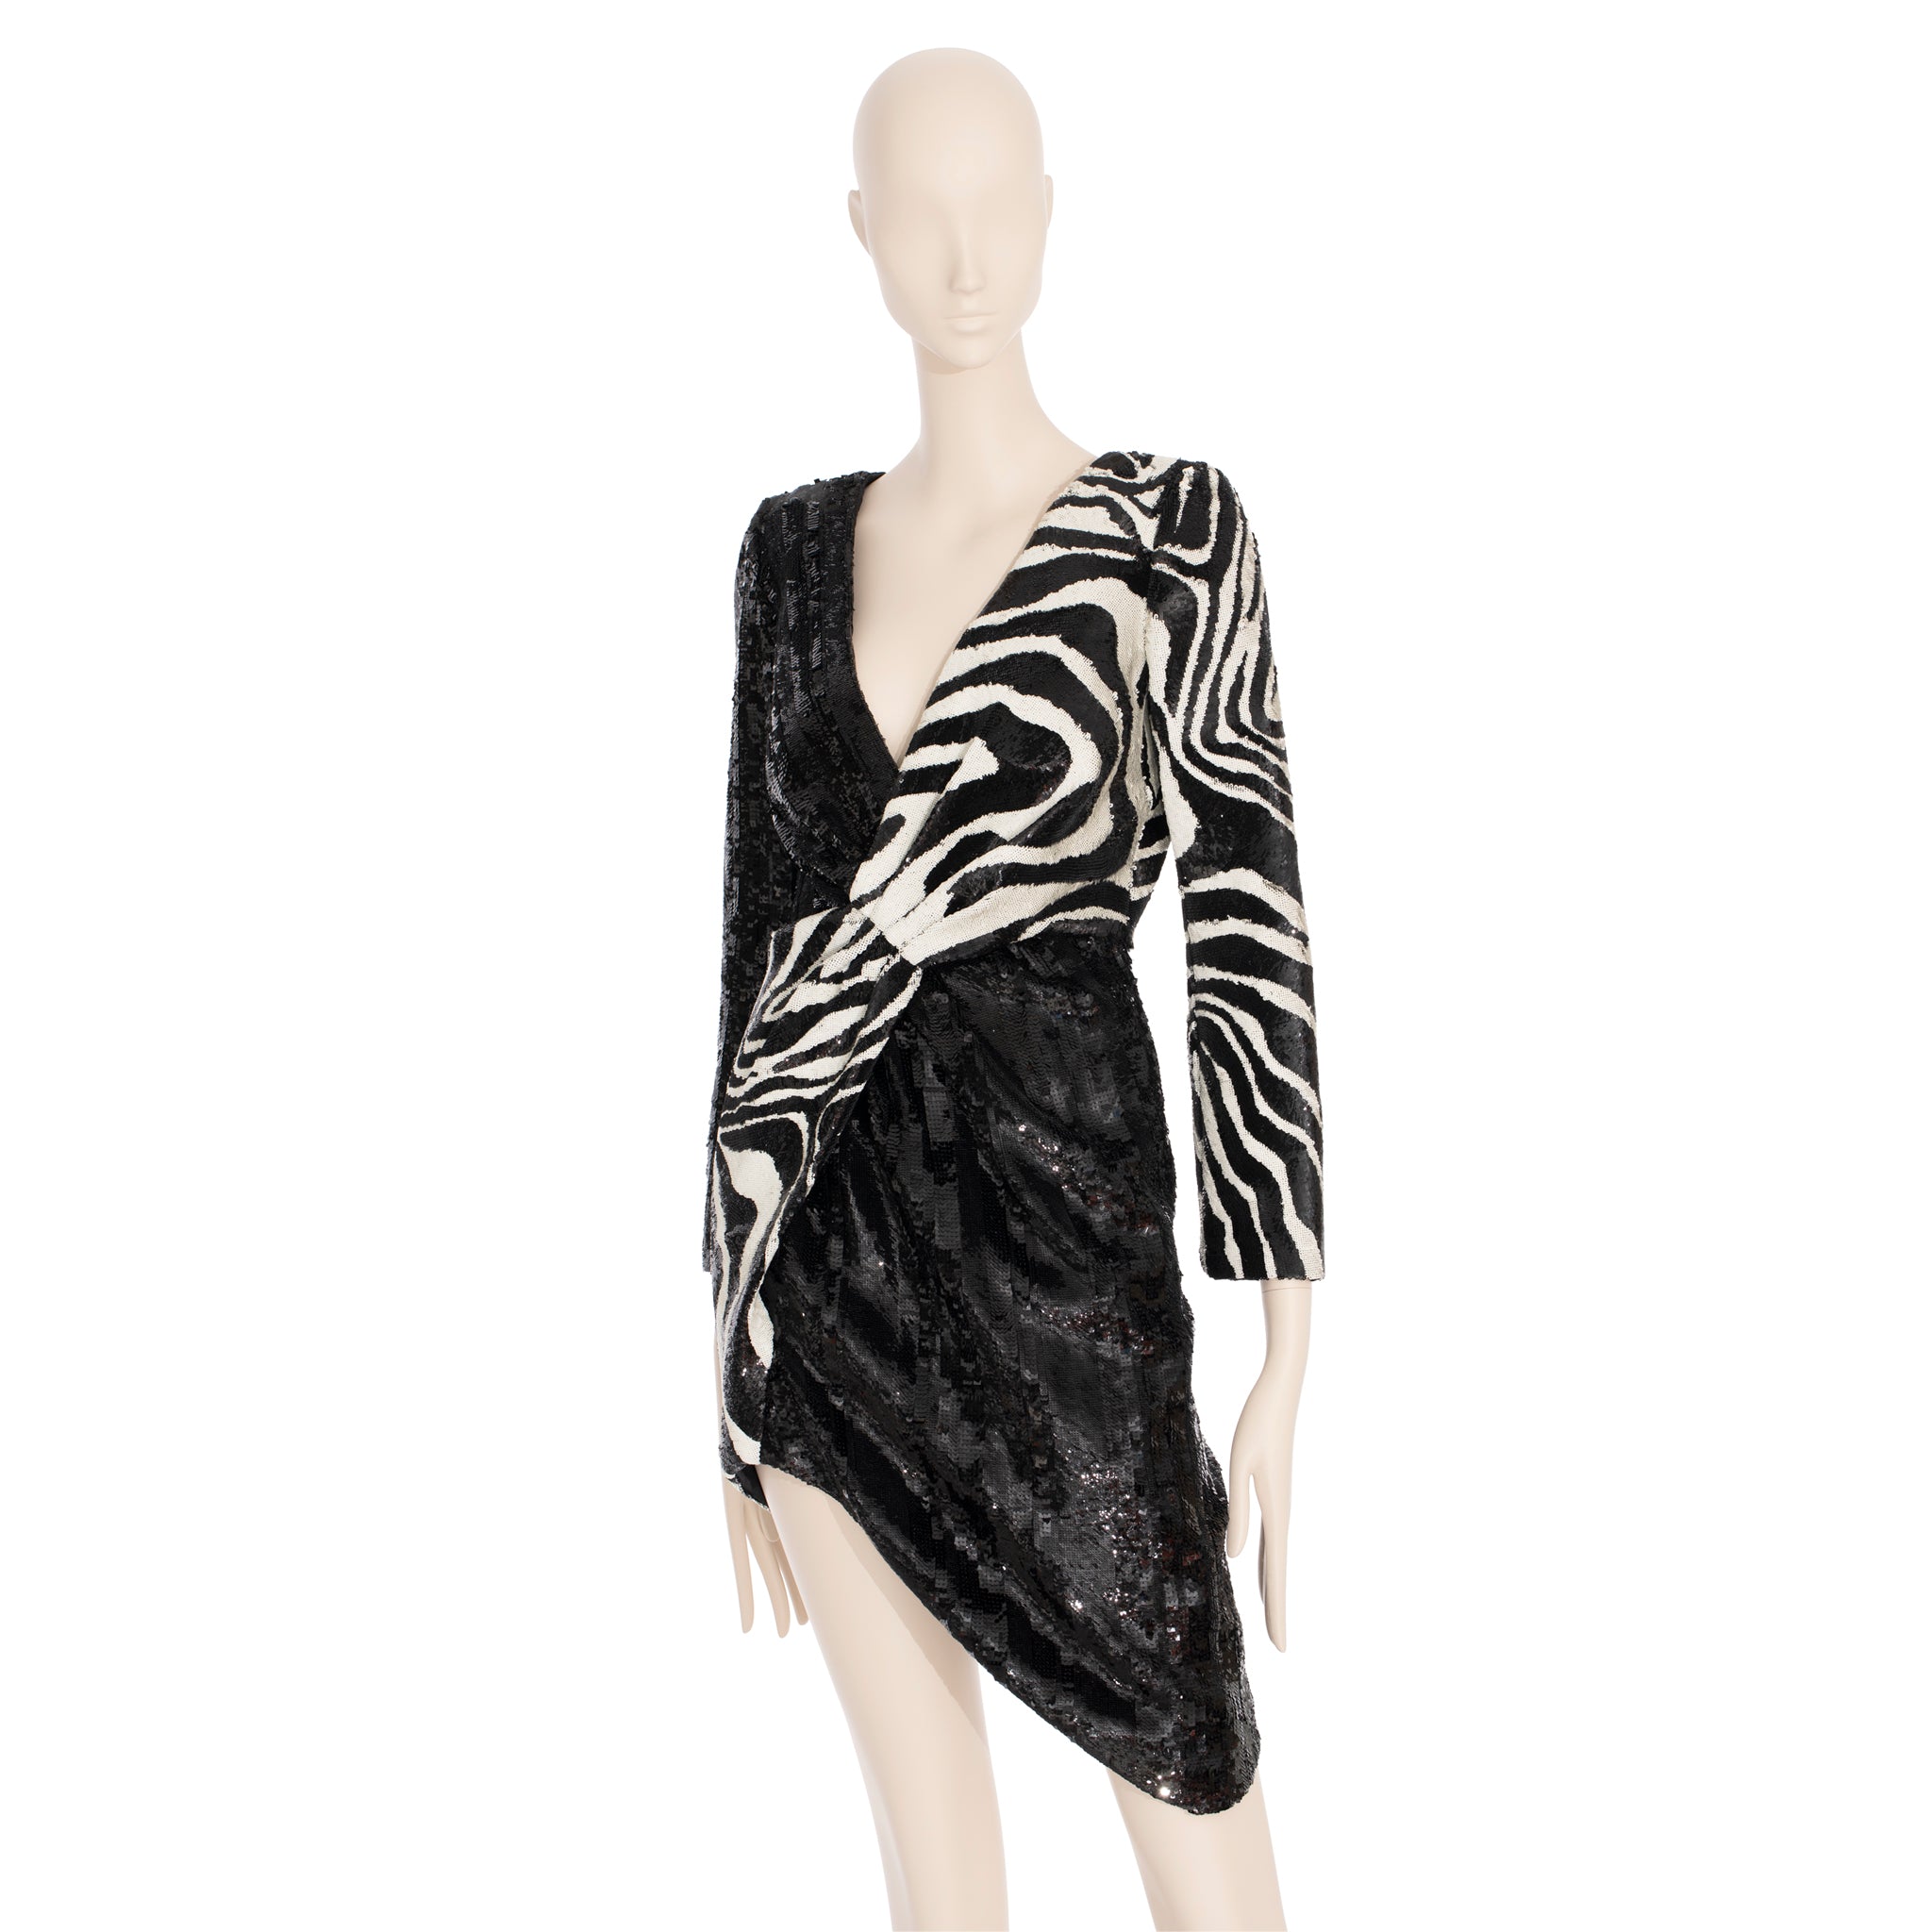 Saint Laurent by Hedi Slimane Asymmetric Zebra Print Sequin Dress 36 FR